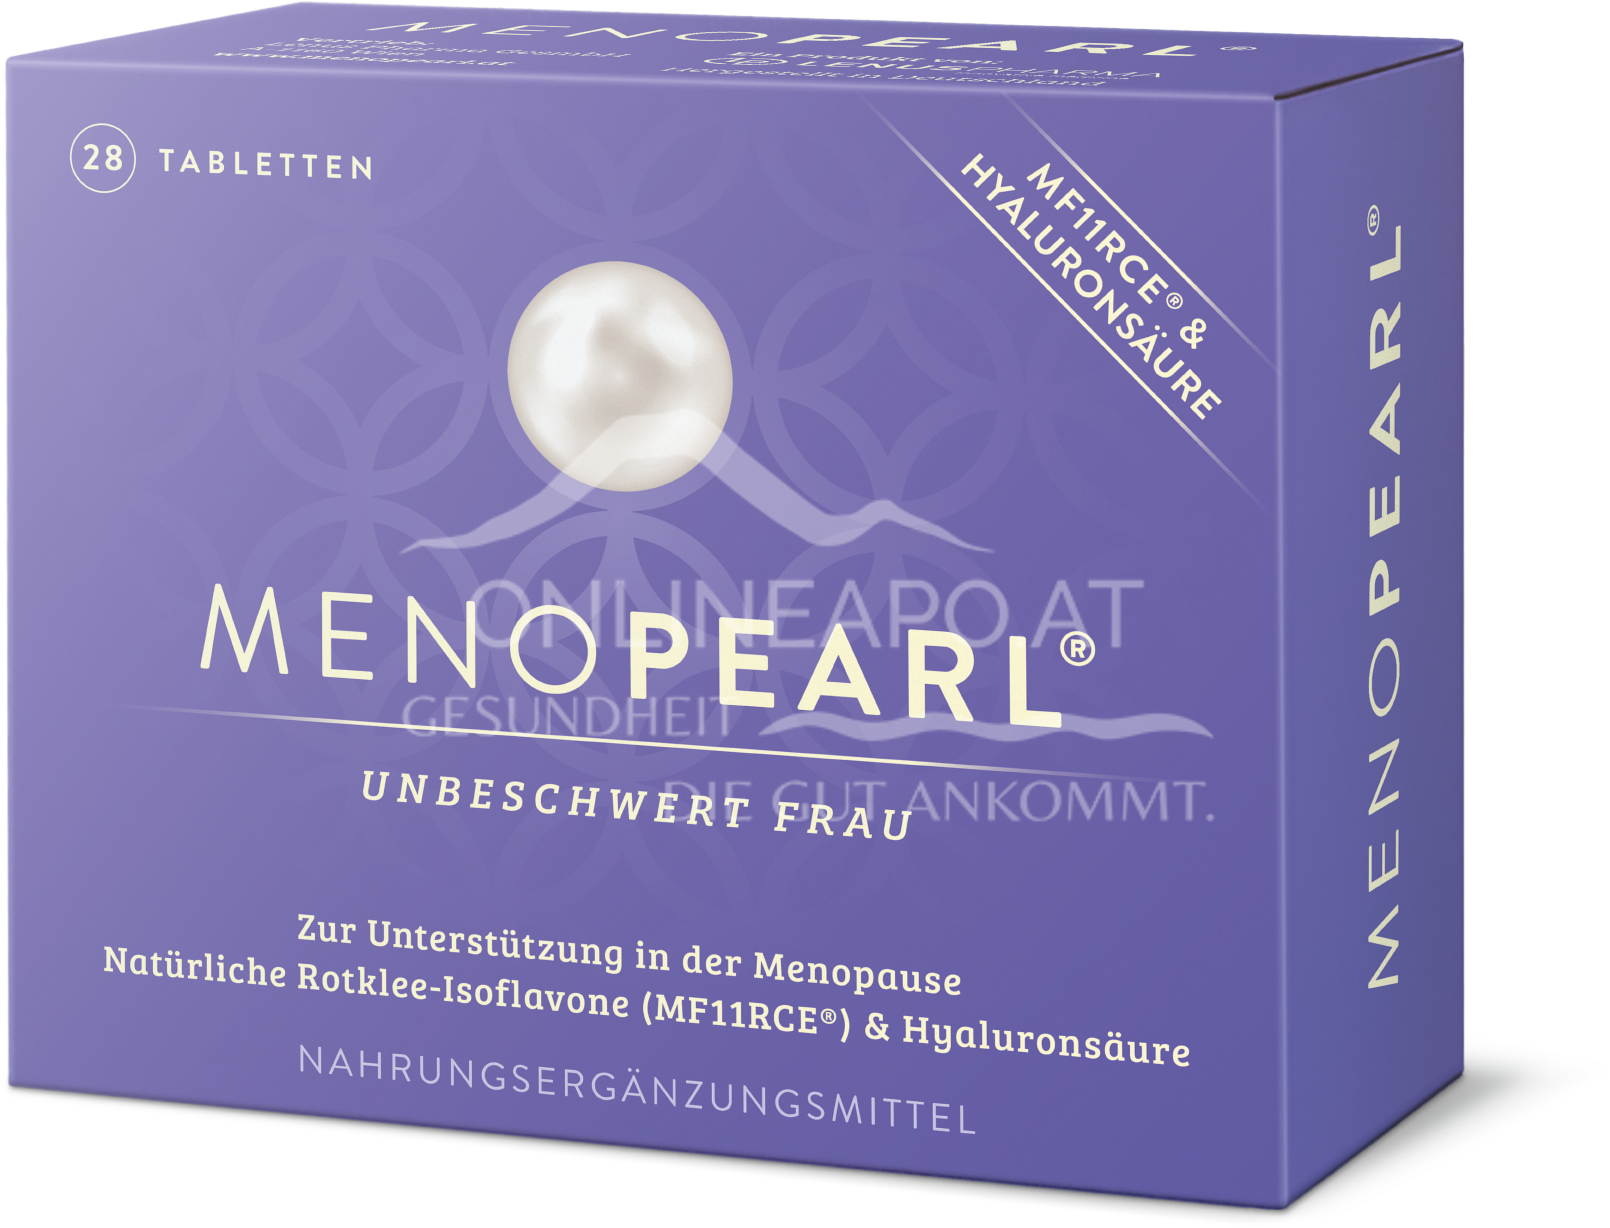 Menopearl® Tabletten